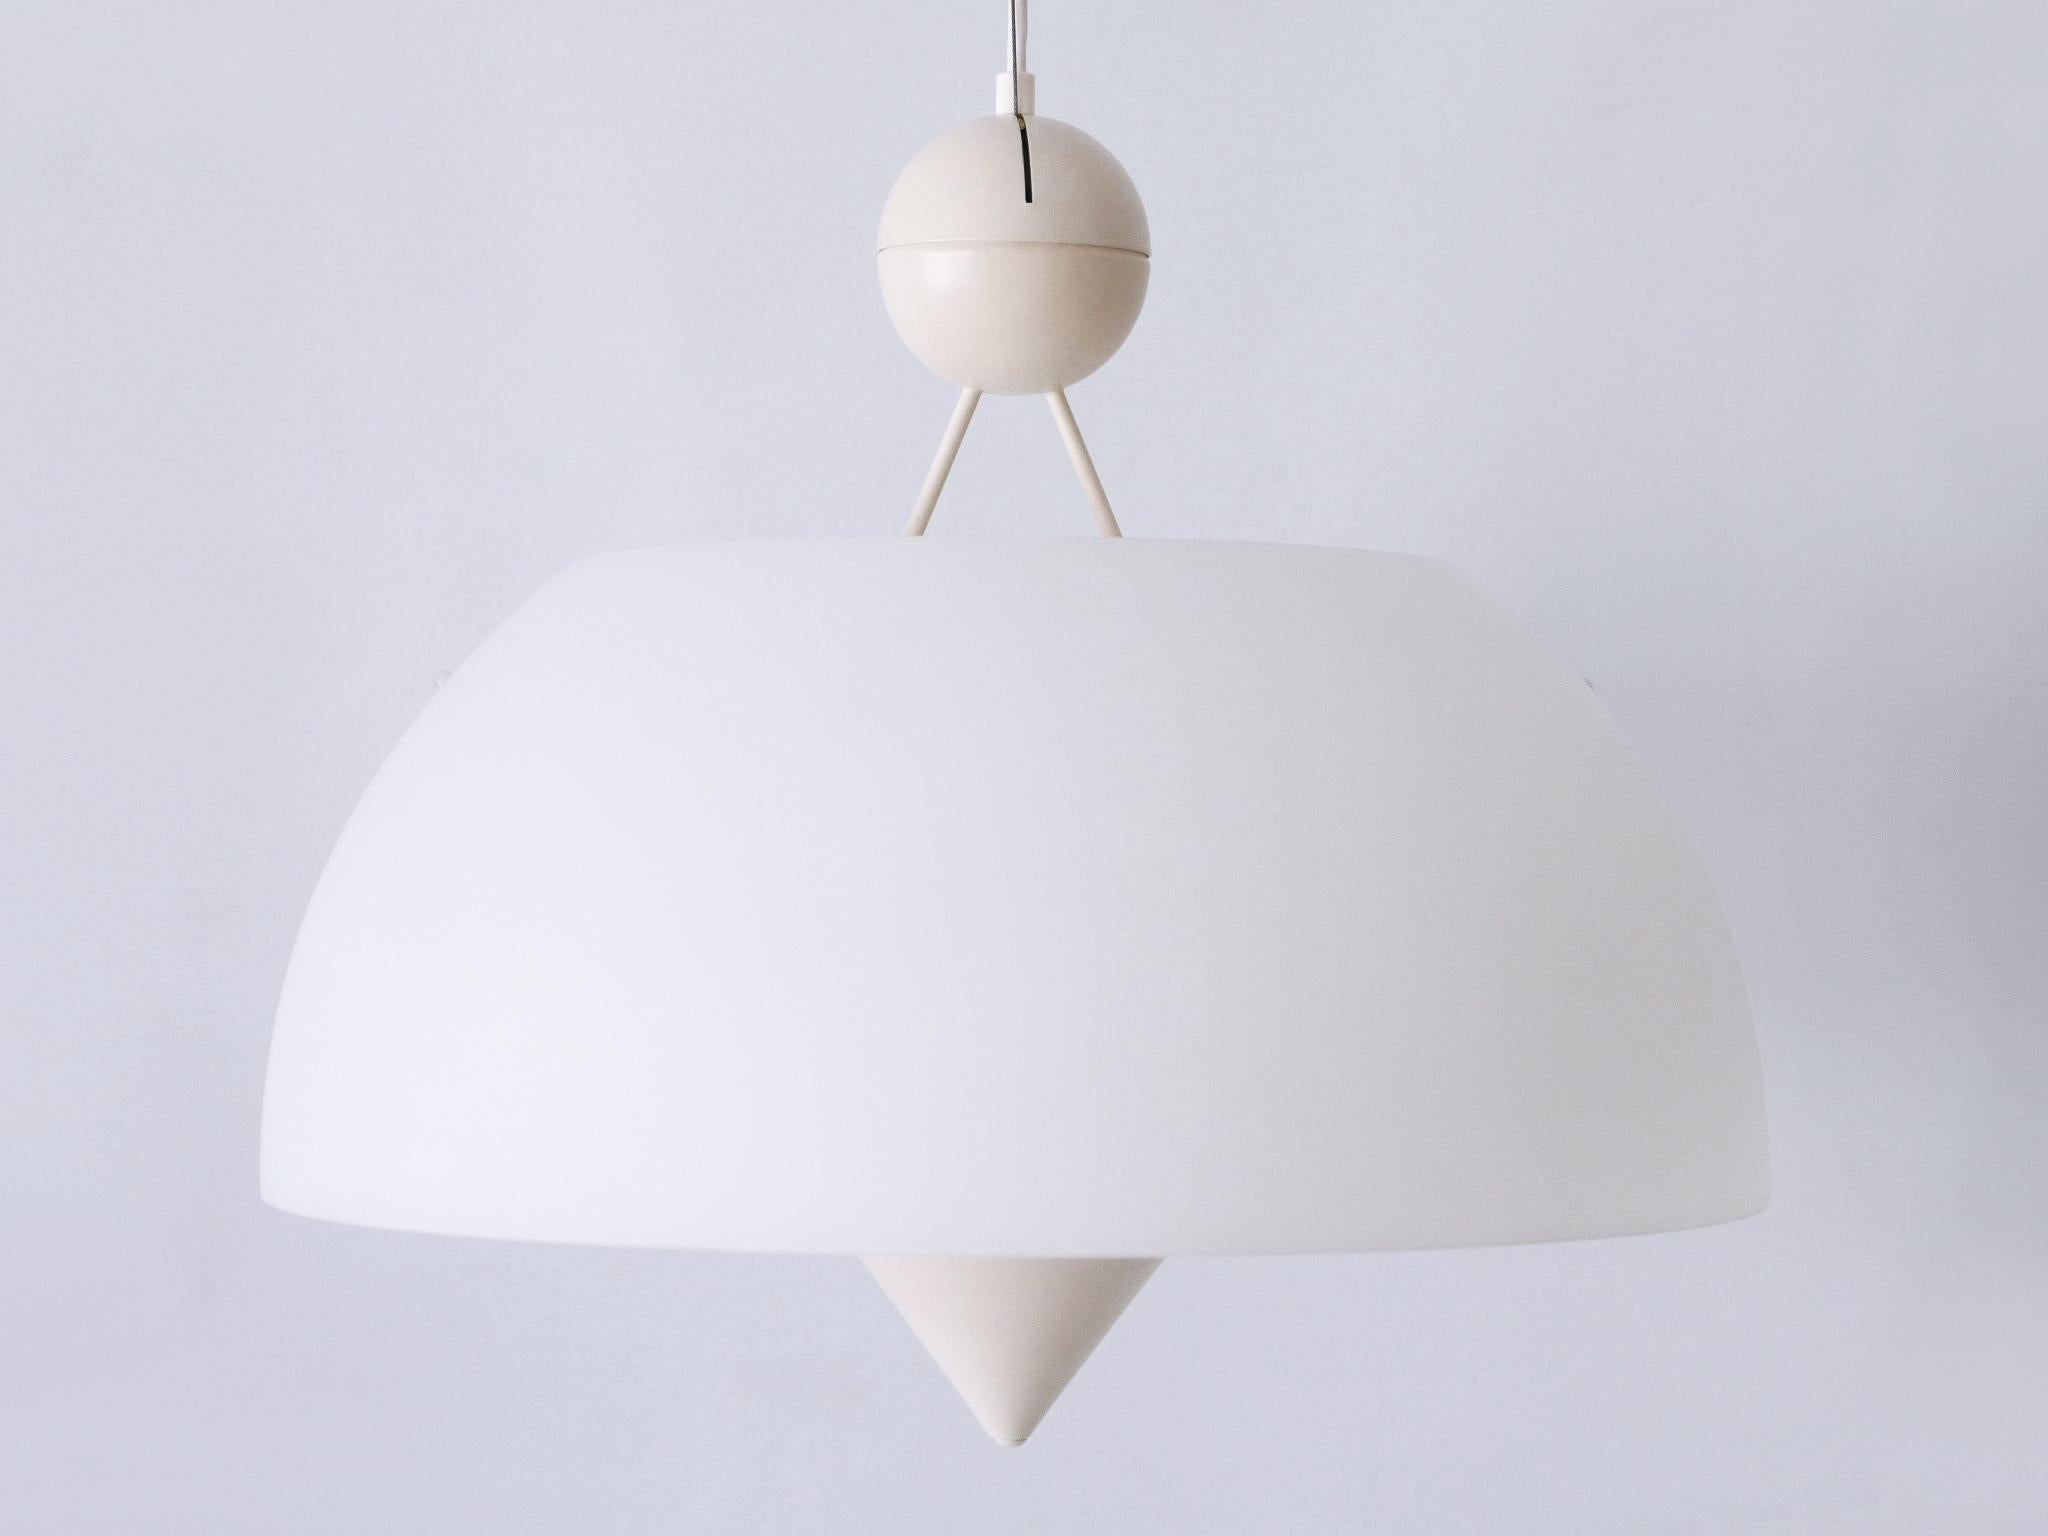 Rare & Elegant Mid-Century Modern Pendant Lamp or Hanging Light Italy 1970s For Sale 4